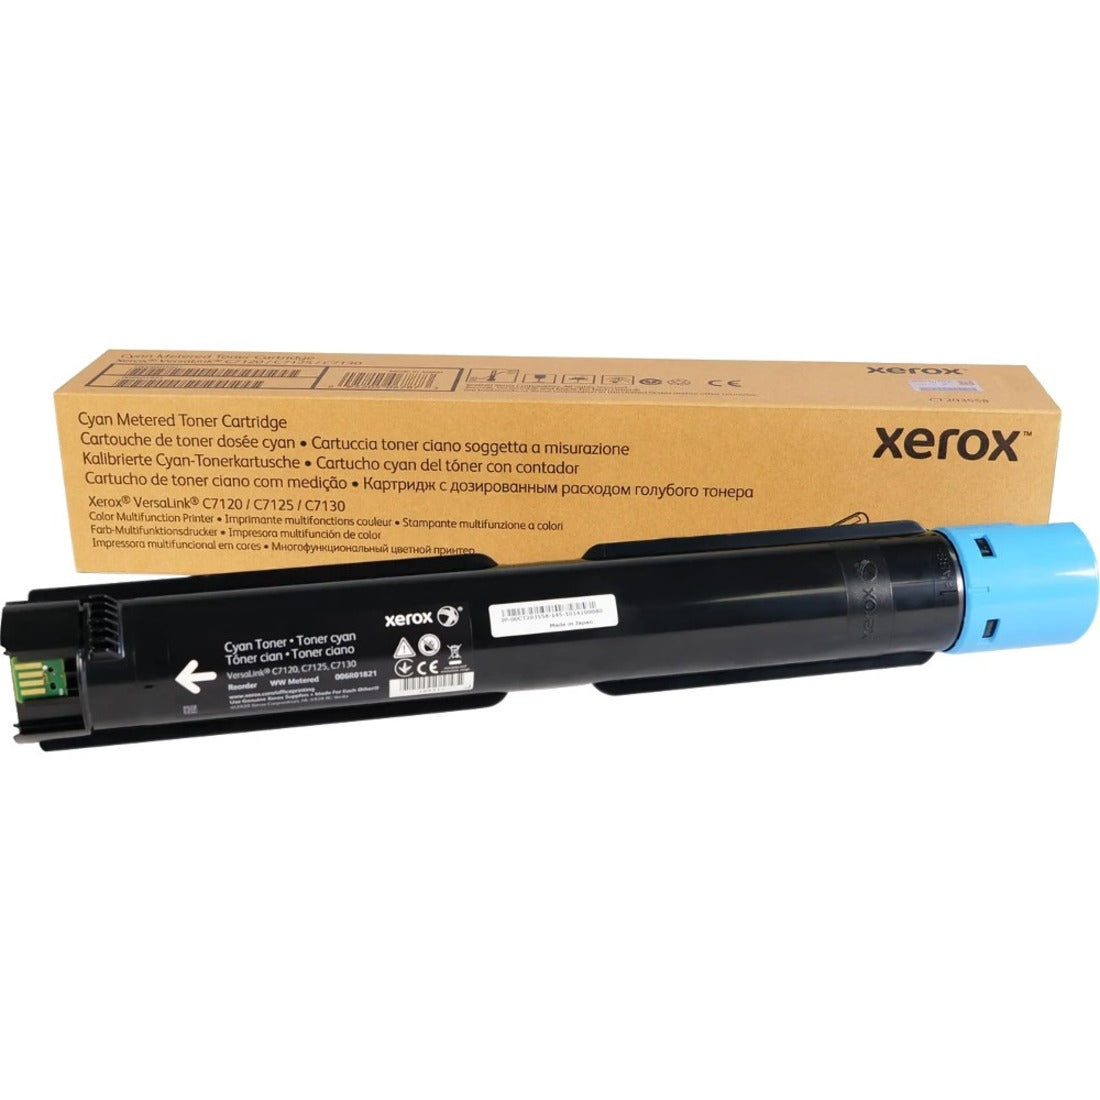 Xerox 006R01825 Toner Cartridge, Cyan Pack - Original Laser Toner for Xerox VersaLink Printers